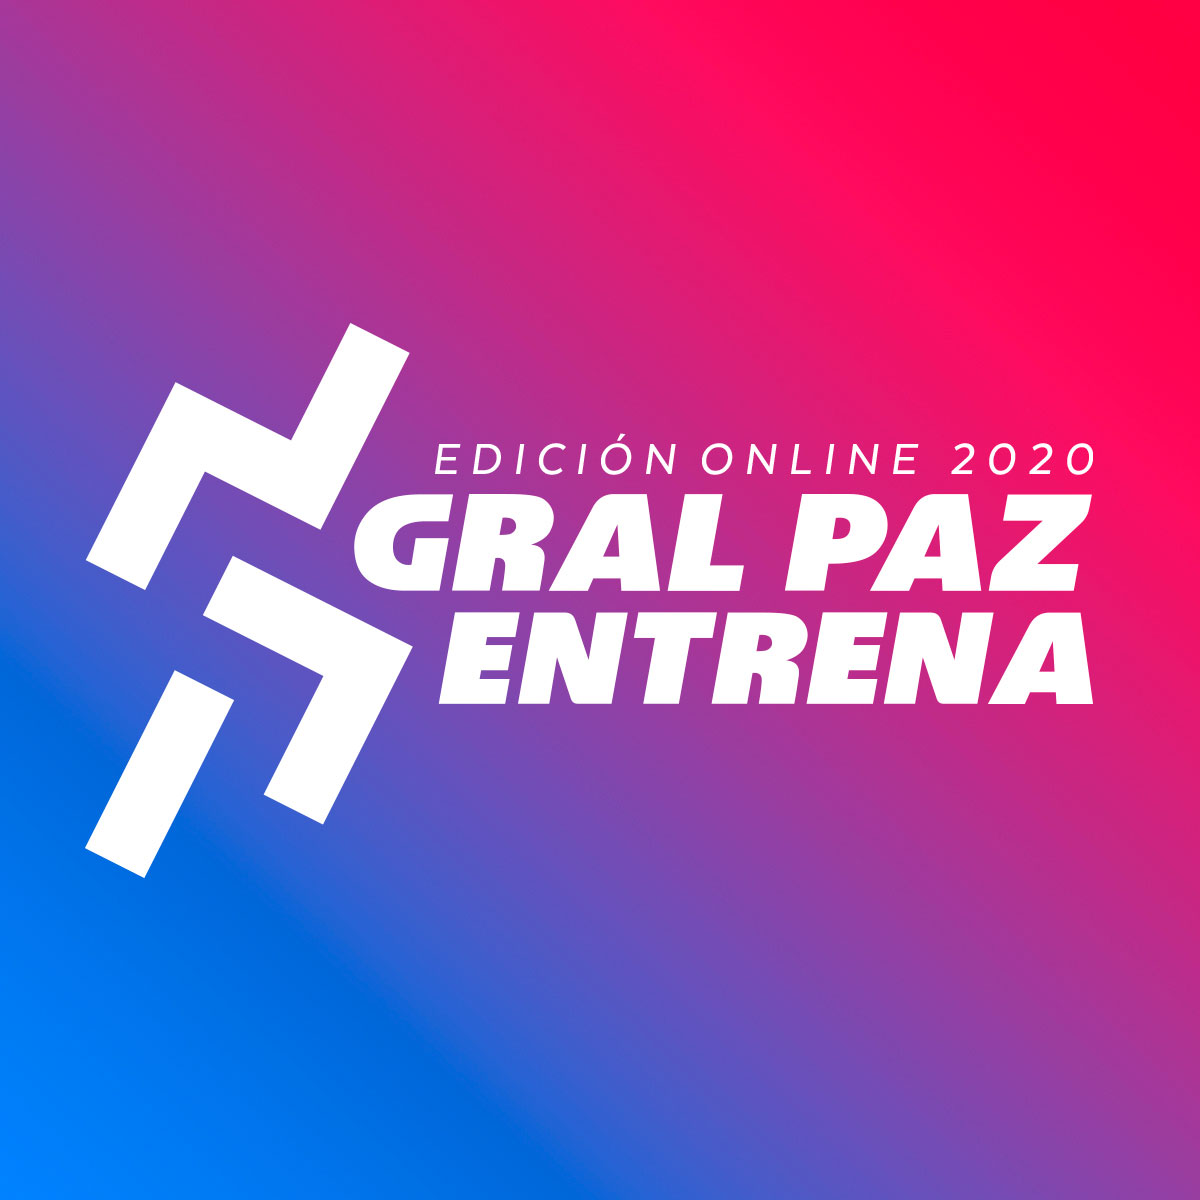 General Paz Entrena